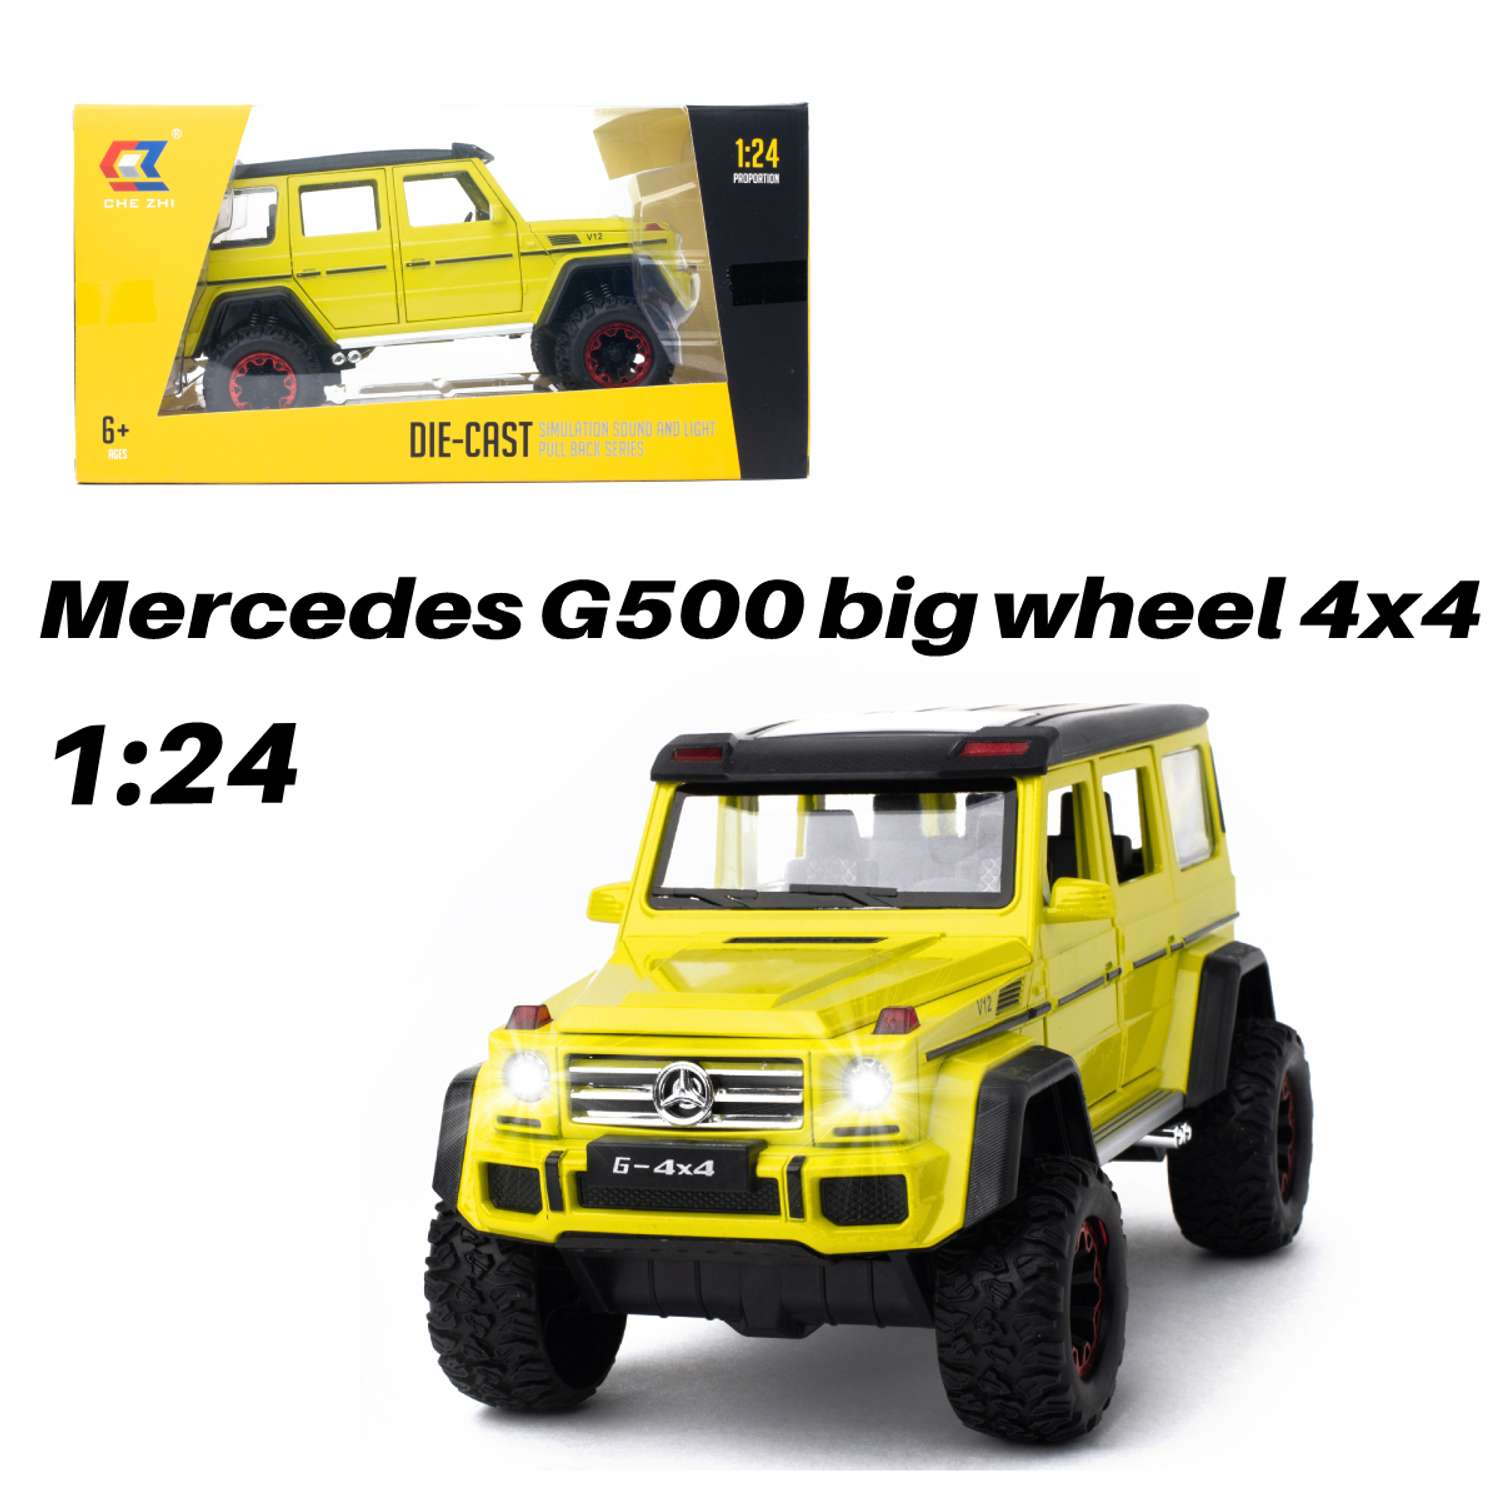 Машинка игрушка железная 1:24 Che Zhi Mercedes G500 big wheel 4x4 CZ117Bg - фото 1